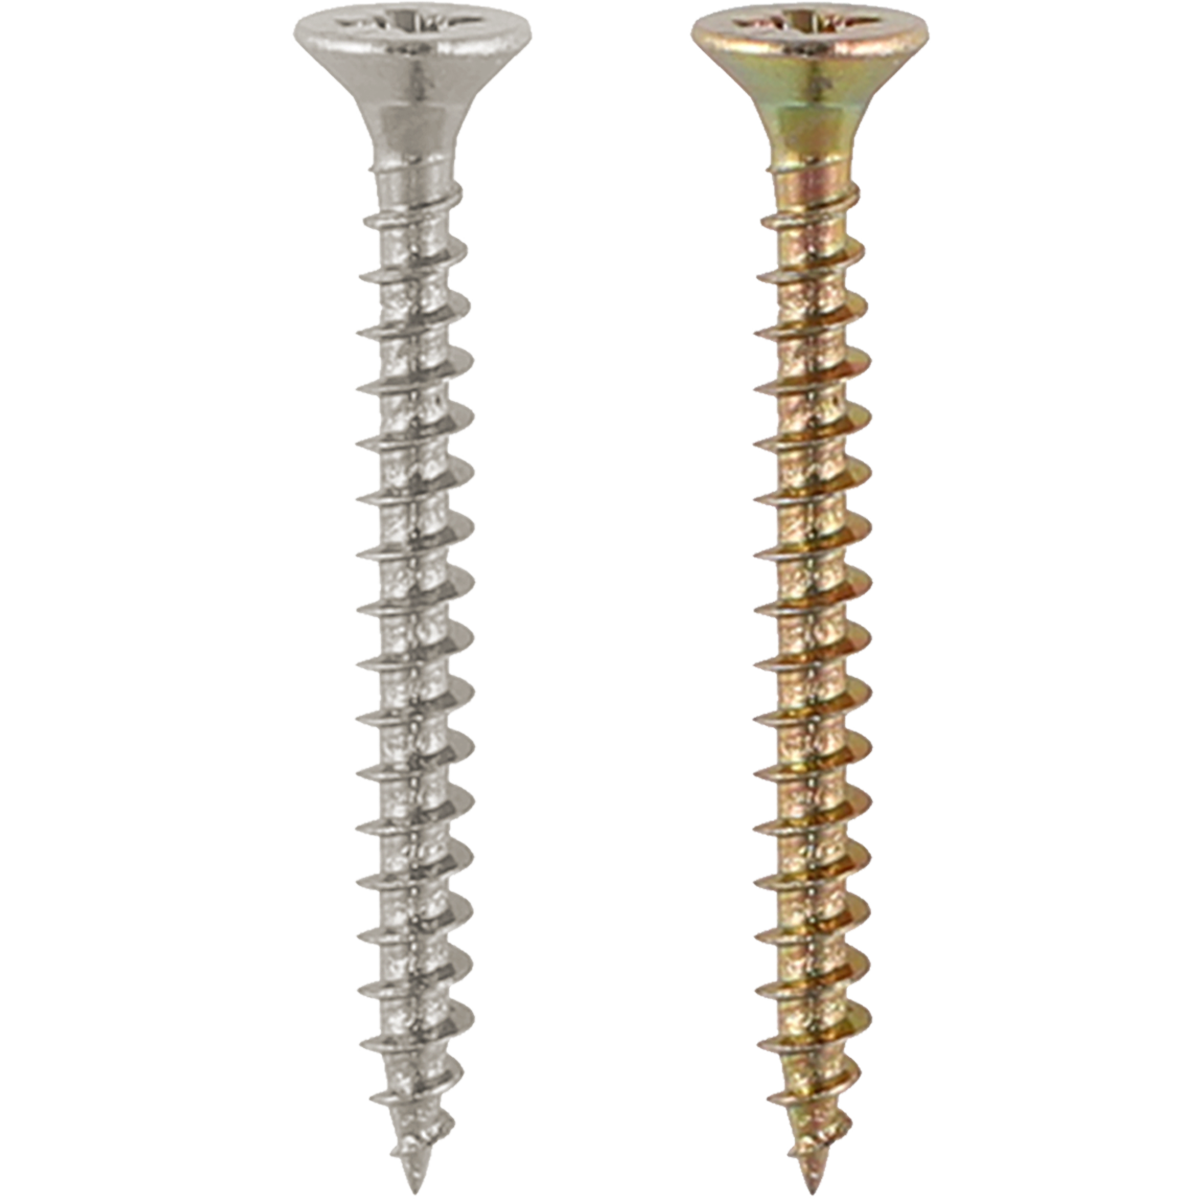 Chipboard screws, a versatile wood screw  with a Pozi drive countersunk head.